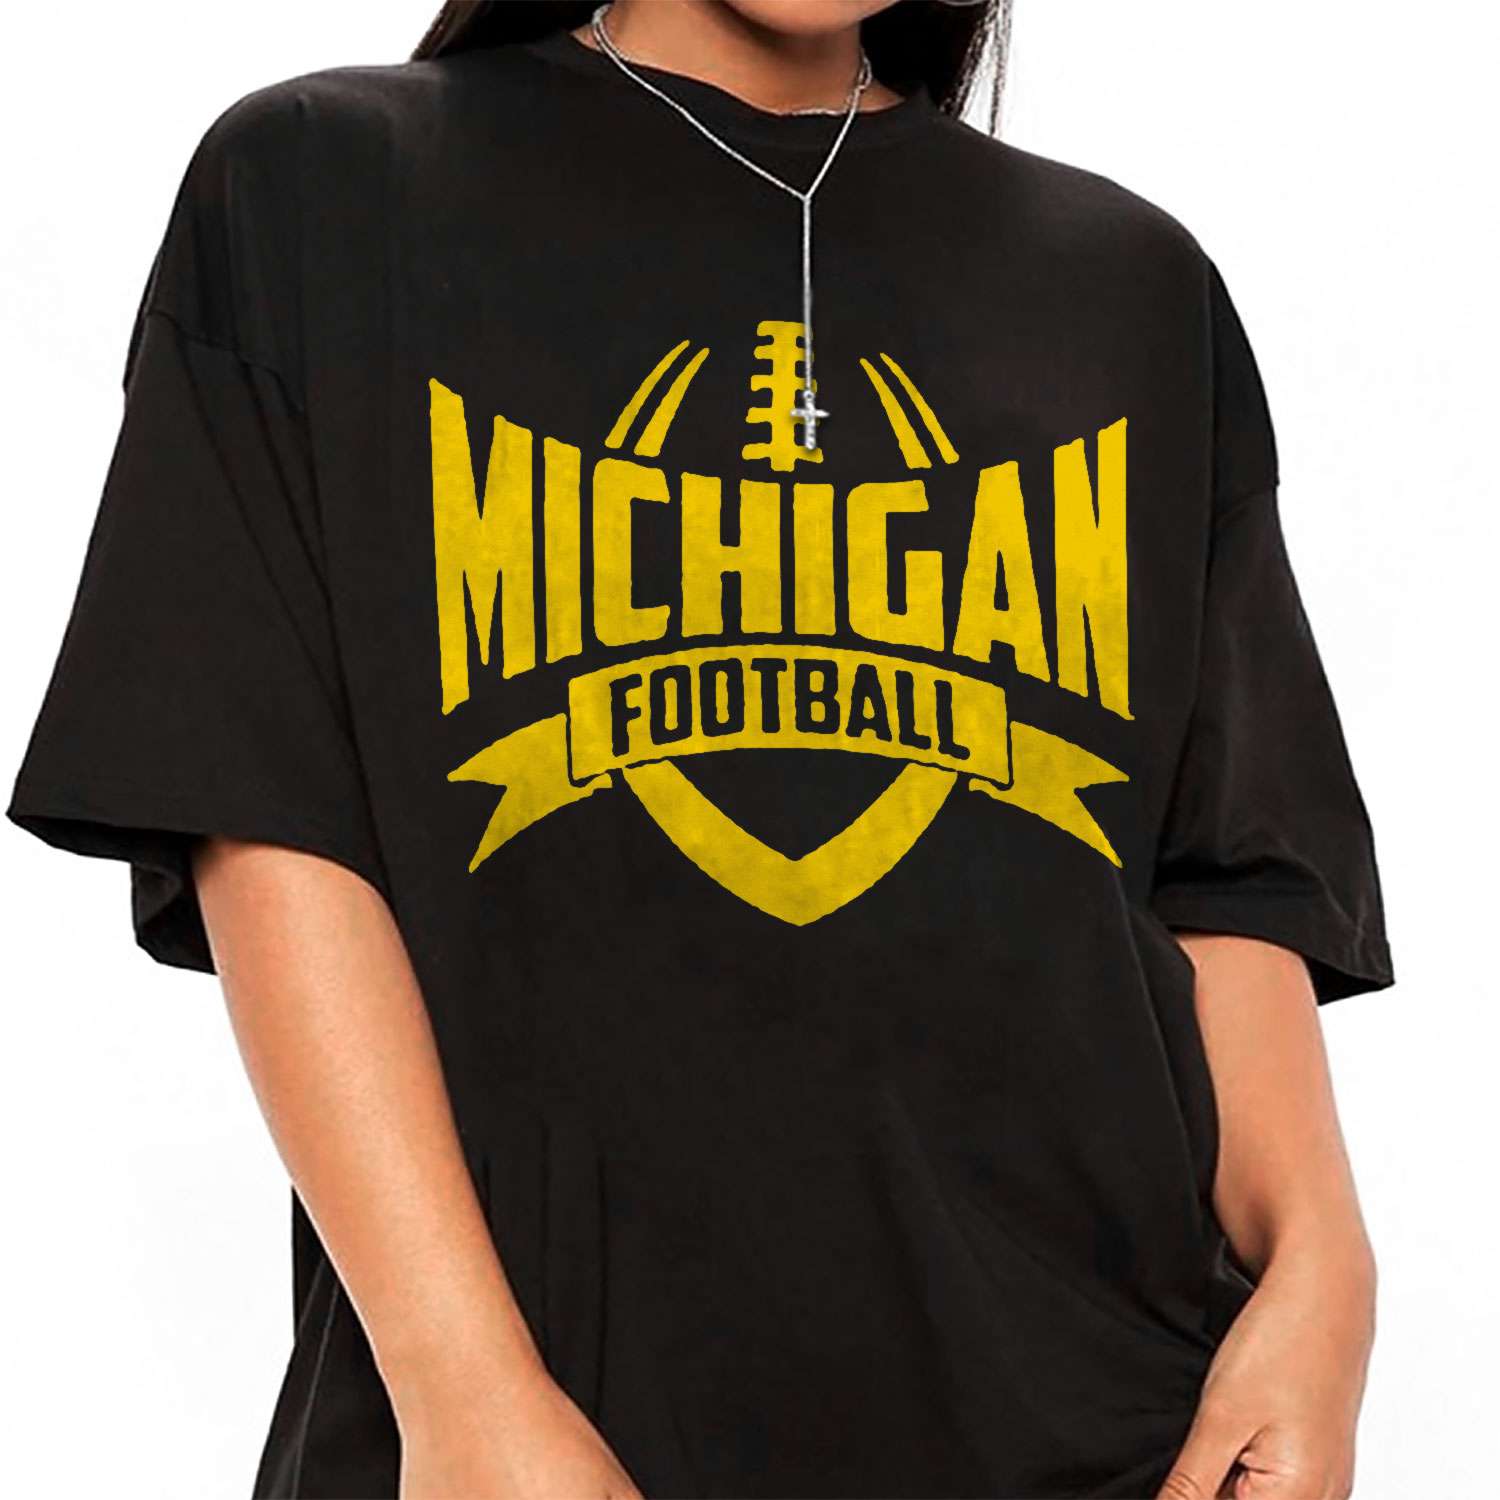 Michigan Football Team T-shirt